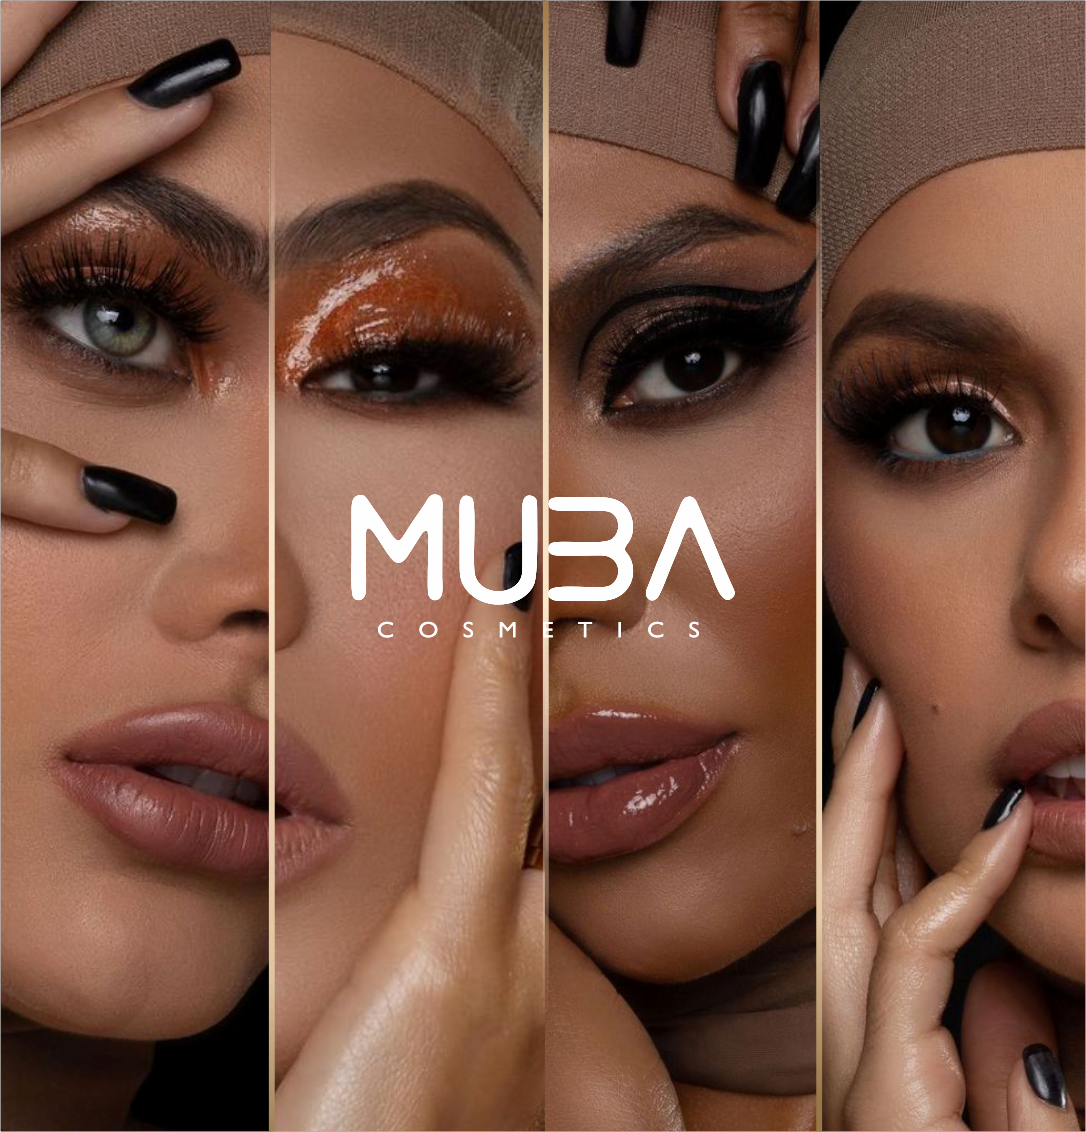 MUBA Cosmetics All vegan, cruelty free makeup